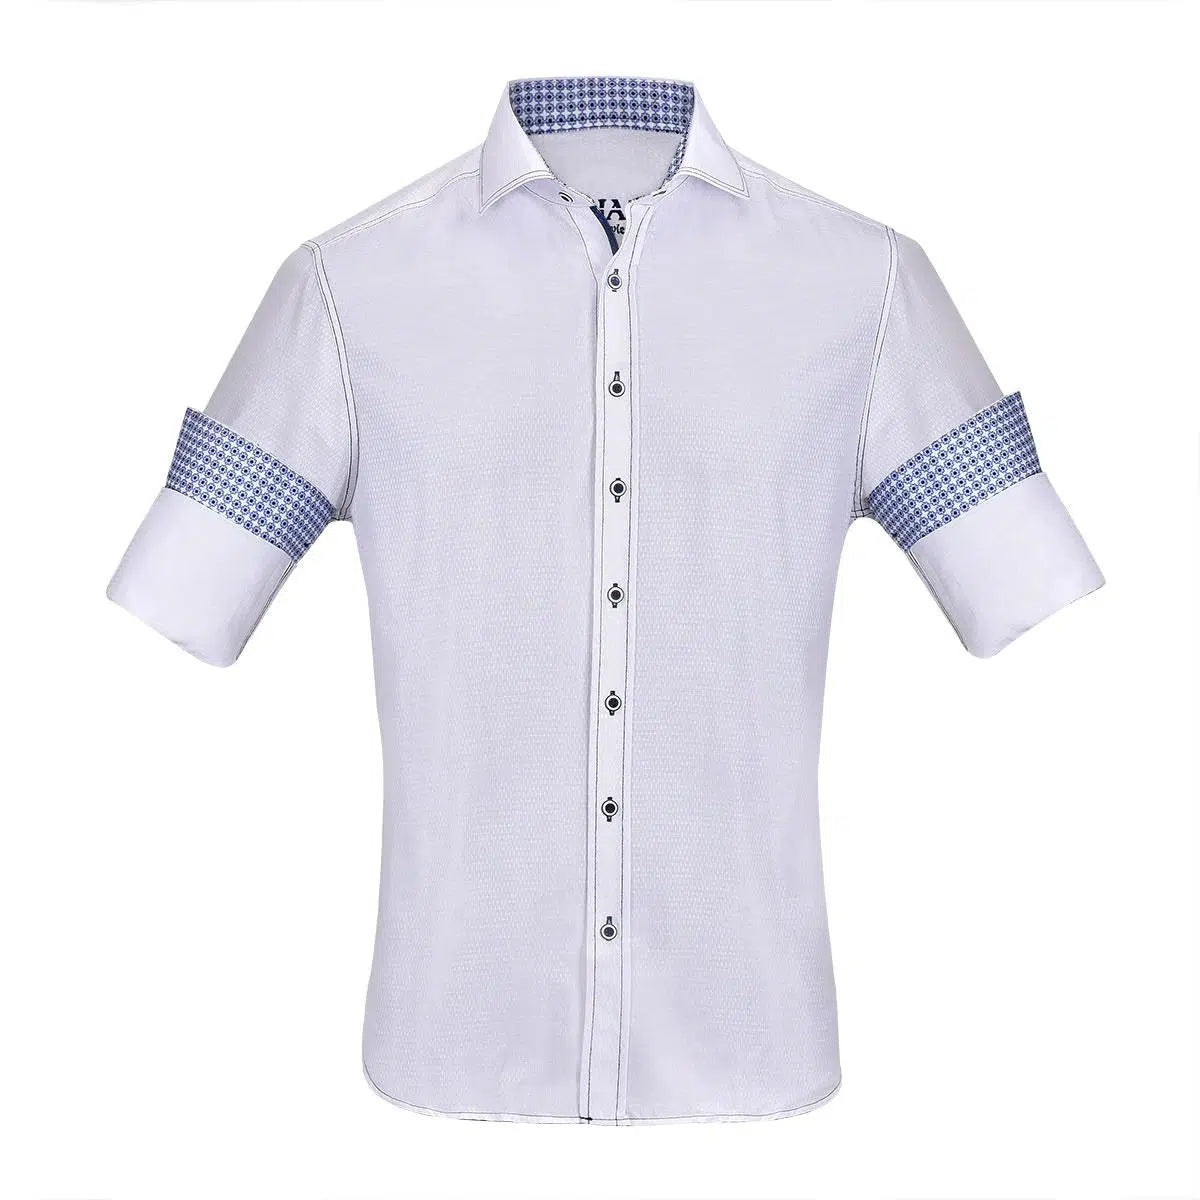 CM59561 - Cuadra white casual fashion shirt for men-Kuet.us